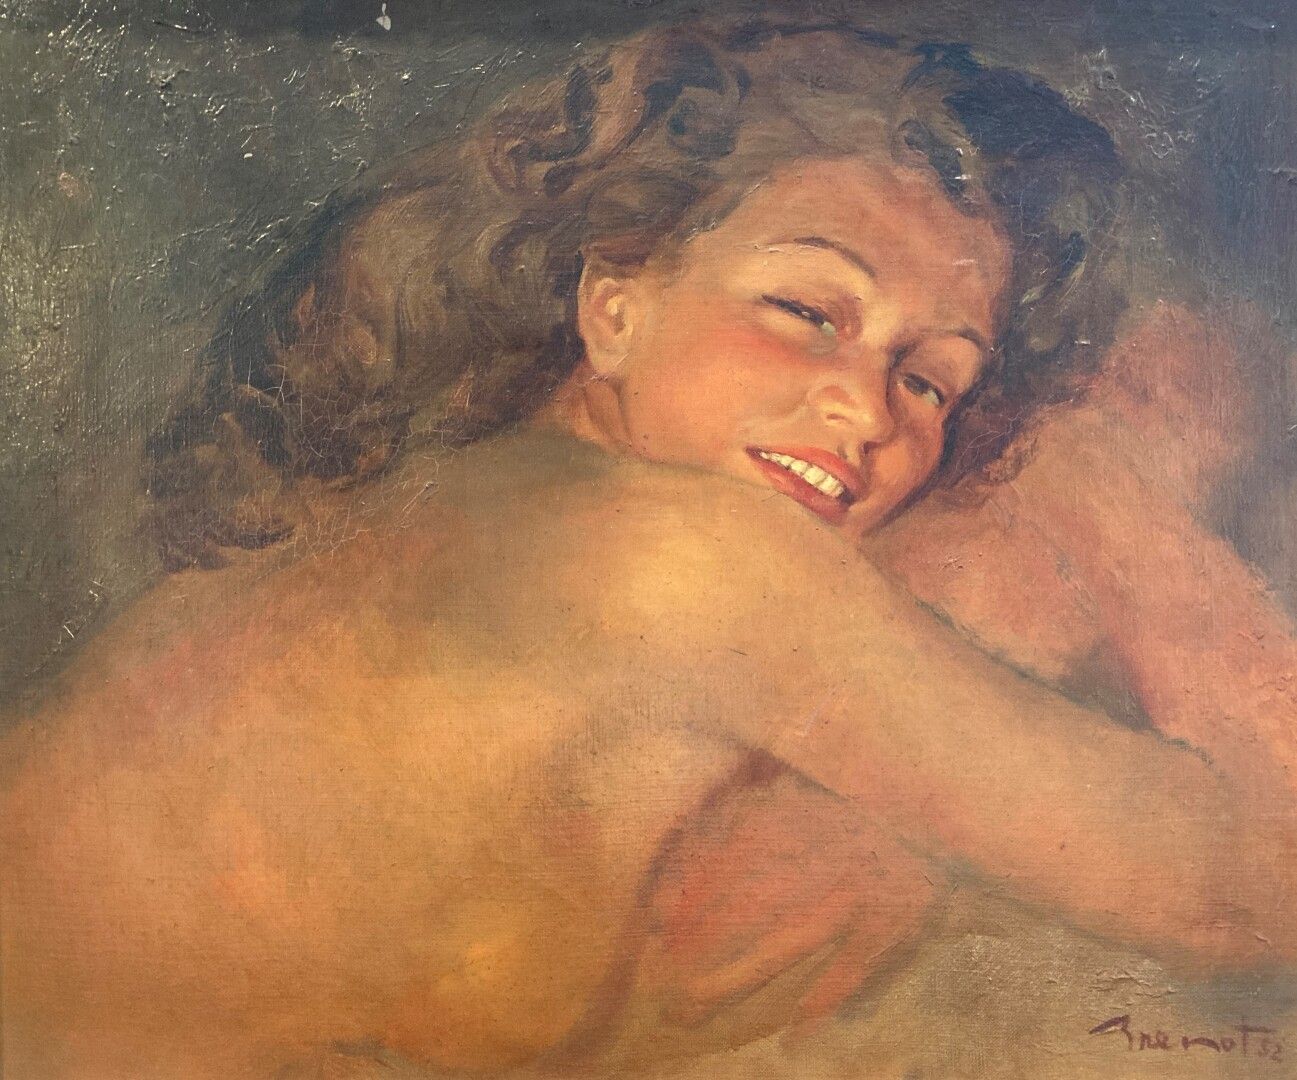 Null 皮埃尔-洛朗-布雷诺（1913-1998

躺着的女人

布面油画，右下角有签名，日期为1952年

45 x 54 厘米